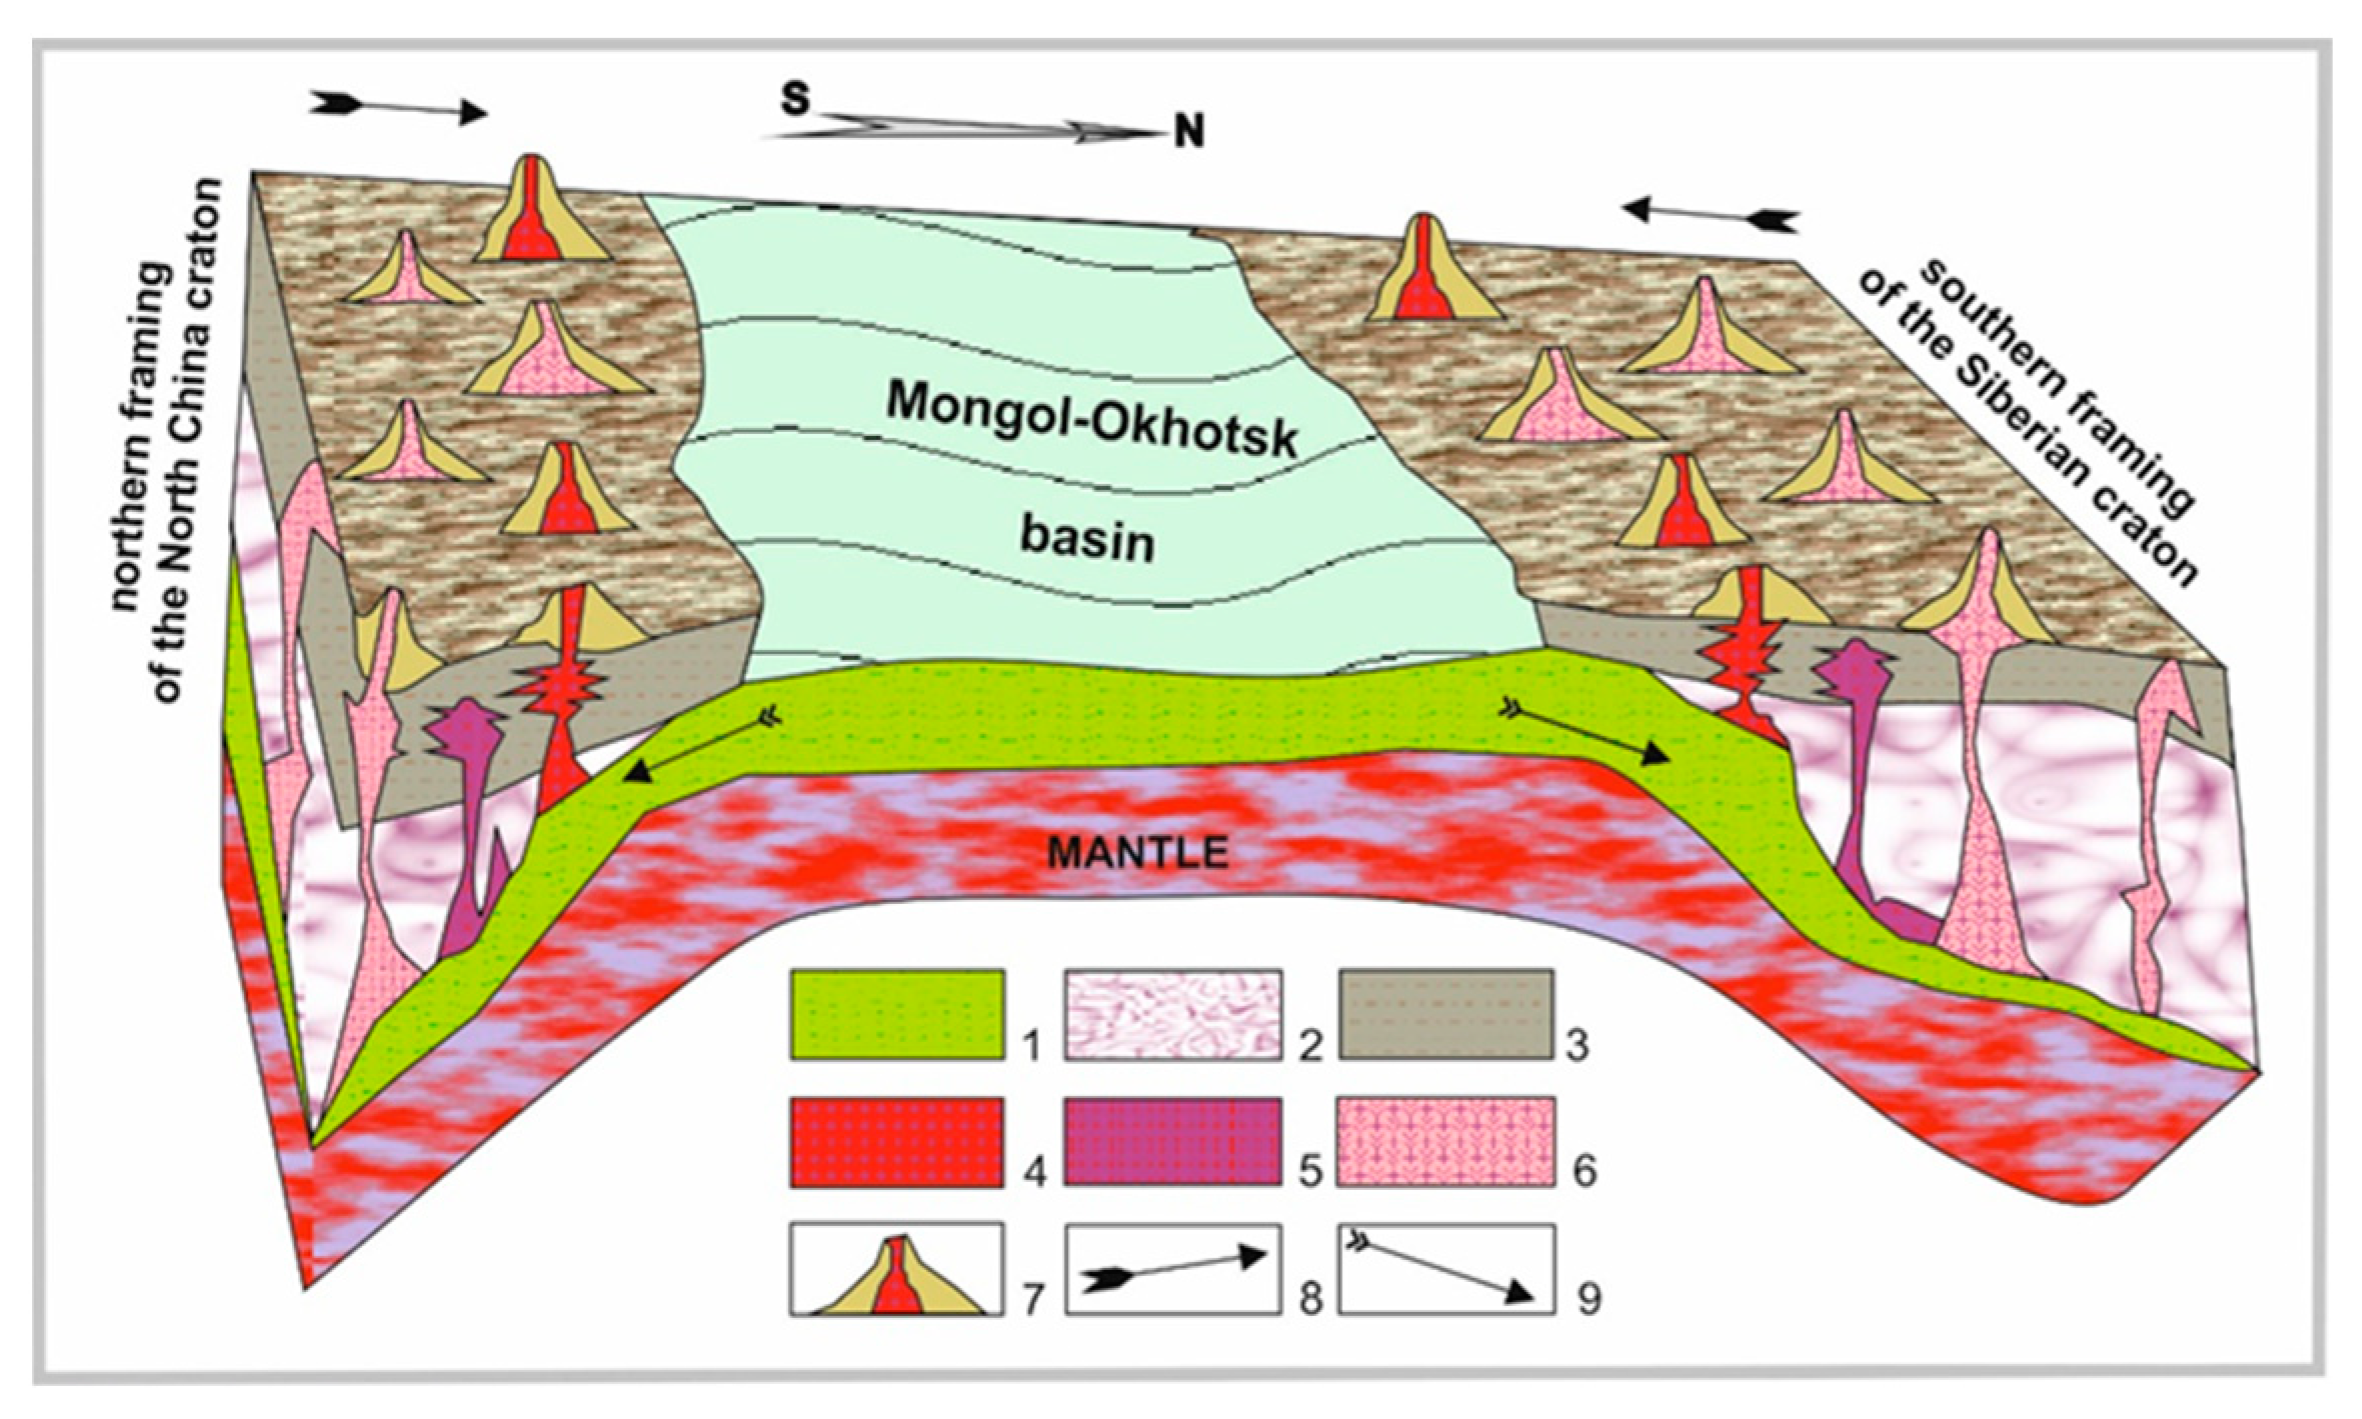 Origin of the Mesozoic magmatism in the North China Craton